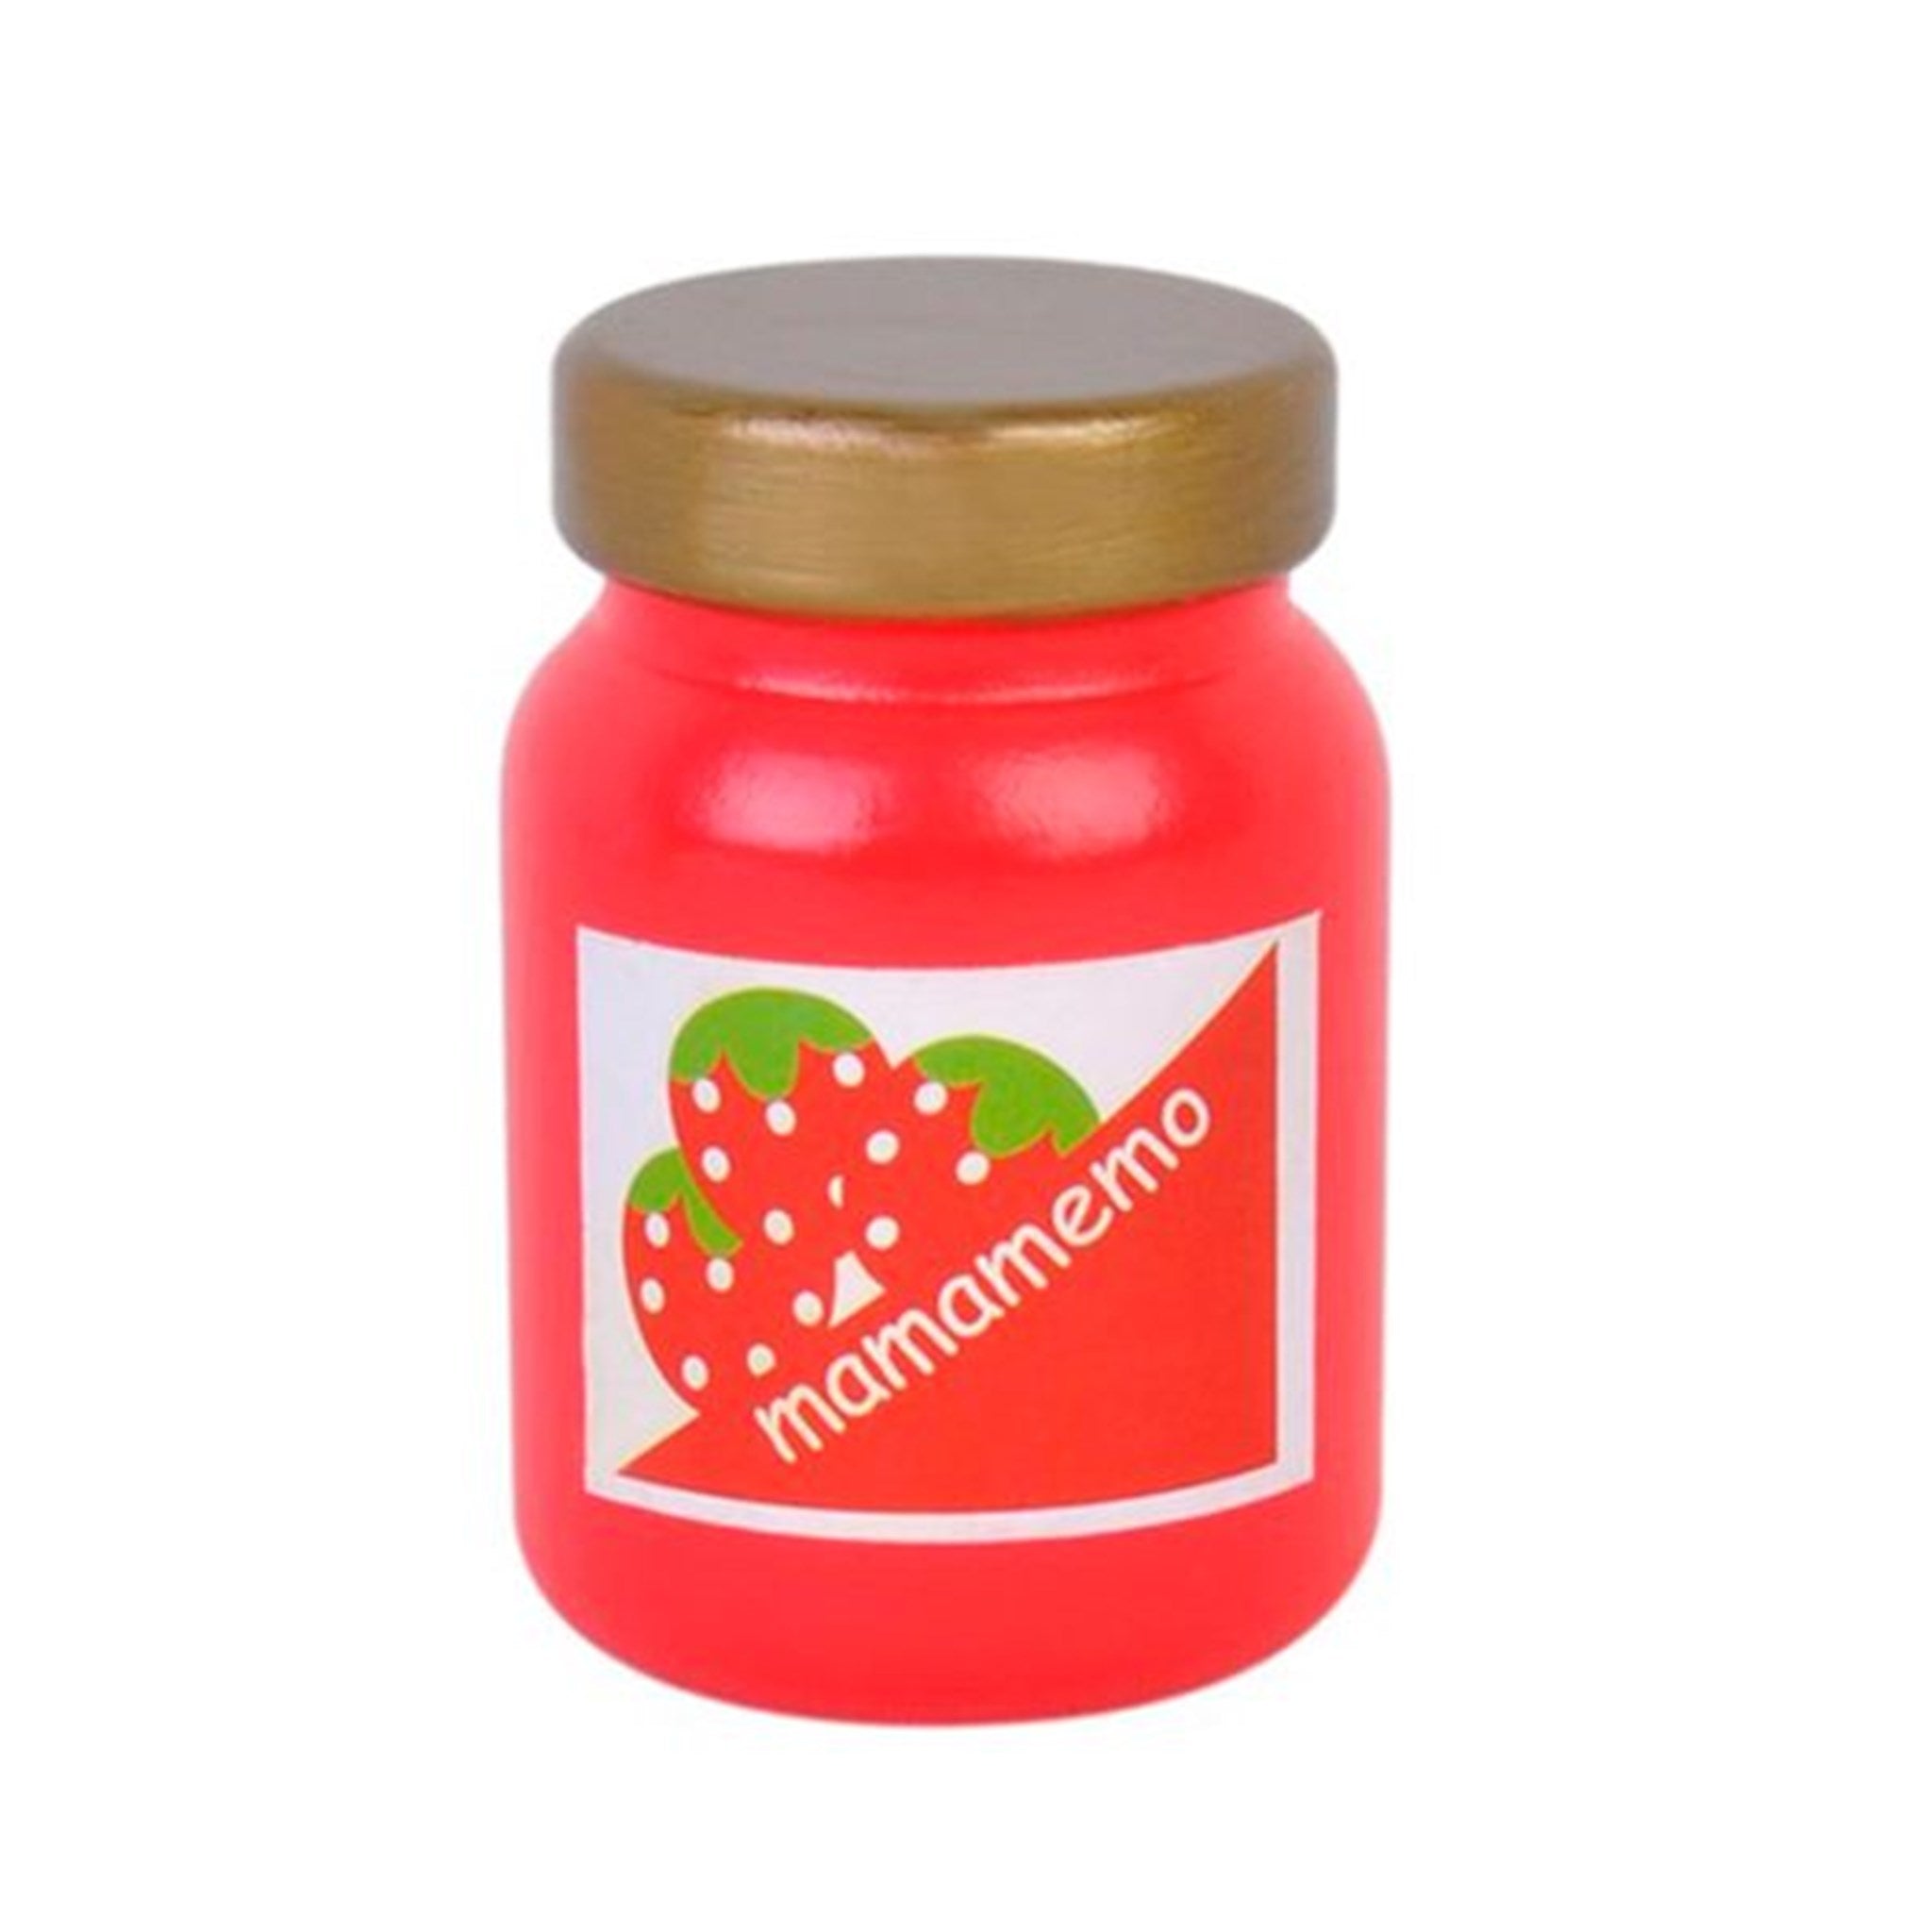 MaMaMeMo Jordbær Marmelade